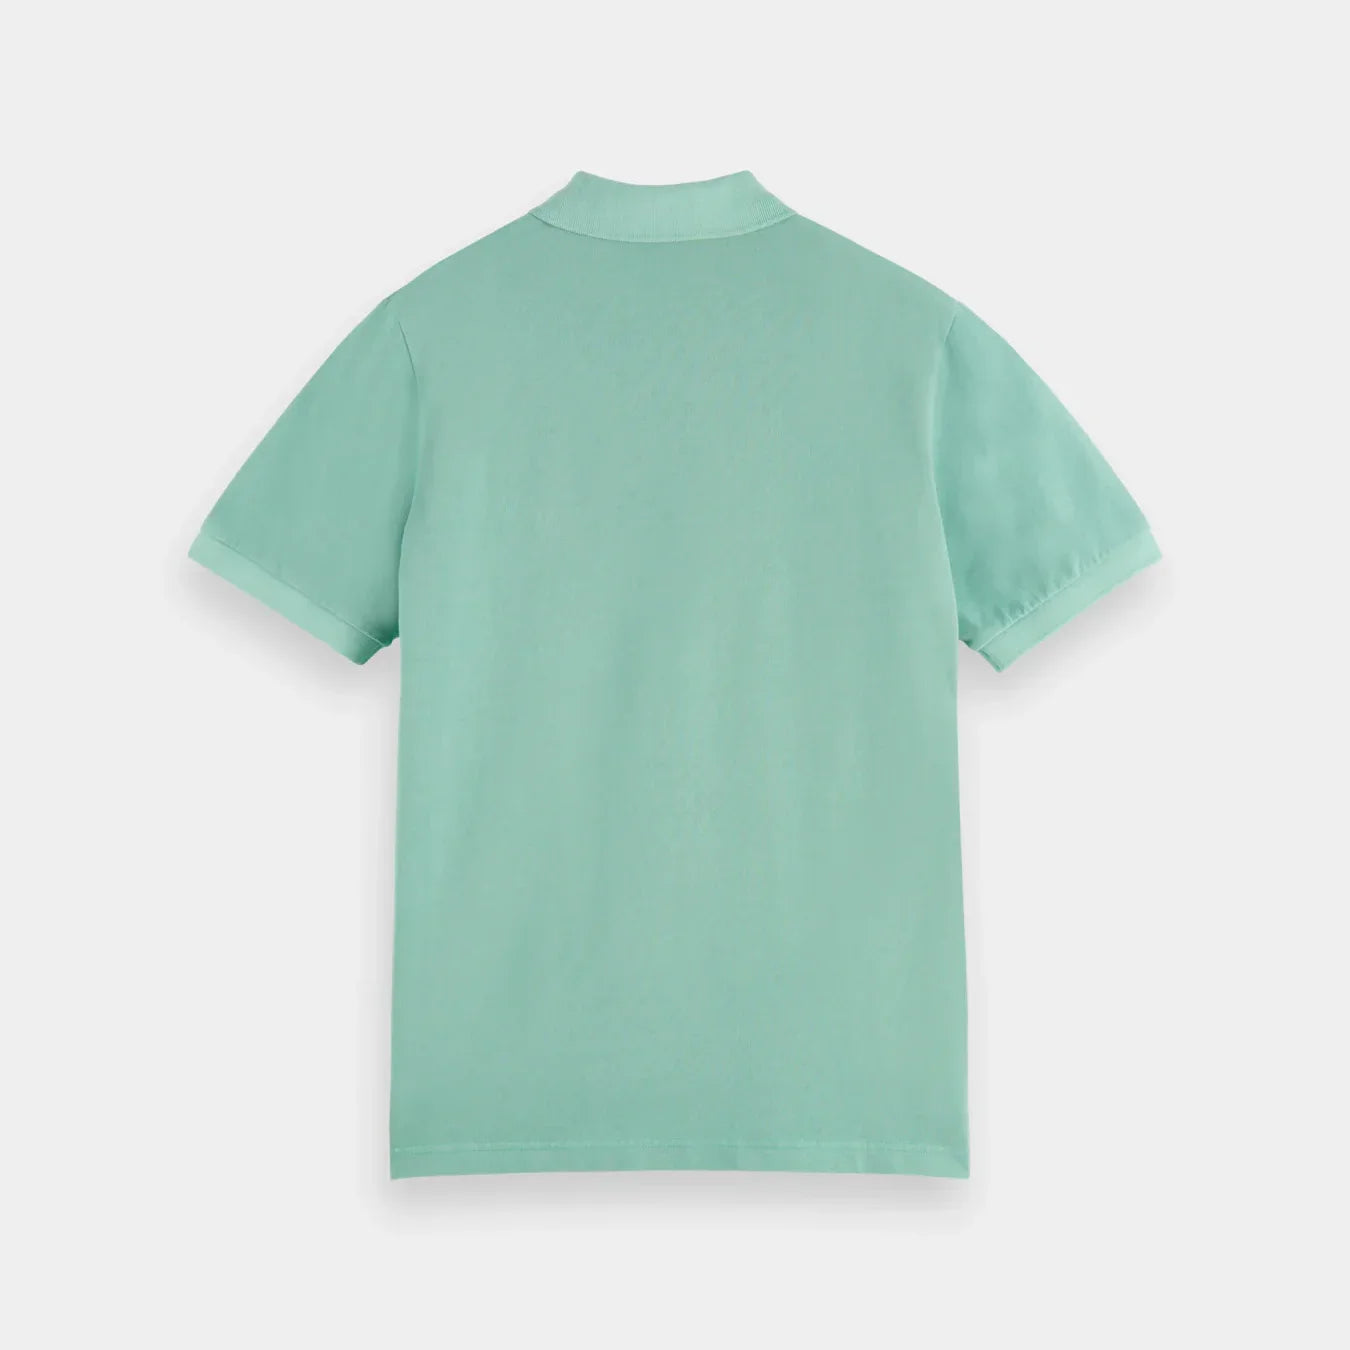 'Scotch & Soda Garment-Dyed Pique Polo Shirt' in 'Absinthe' colour